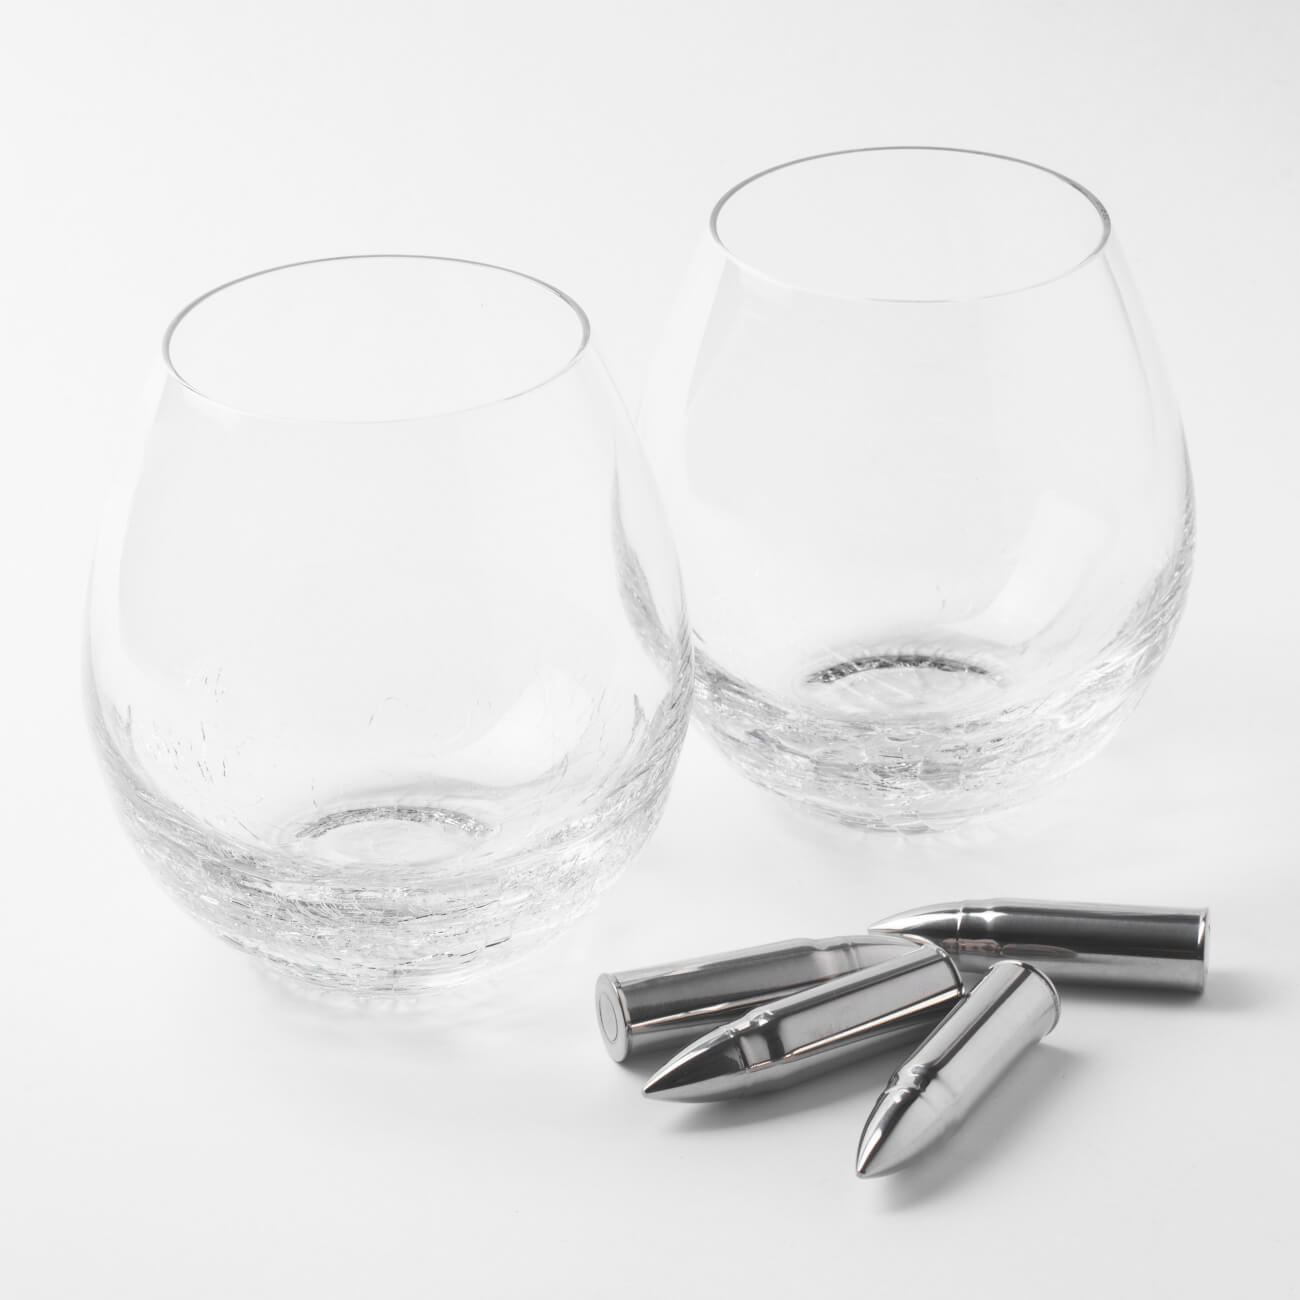 Набор для виски, 2 перс, 6 пр, стаканы/кубики, стекло/сталь, Кракелюр, Пули, Bullet набор для виски 1 перс 4 пр стакан кубики стекло р мрамор mosaic